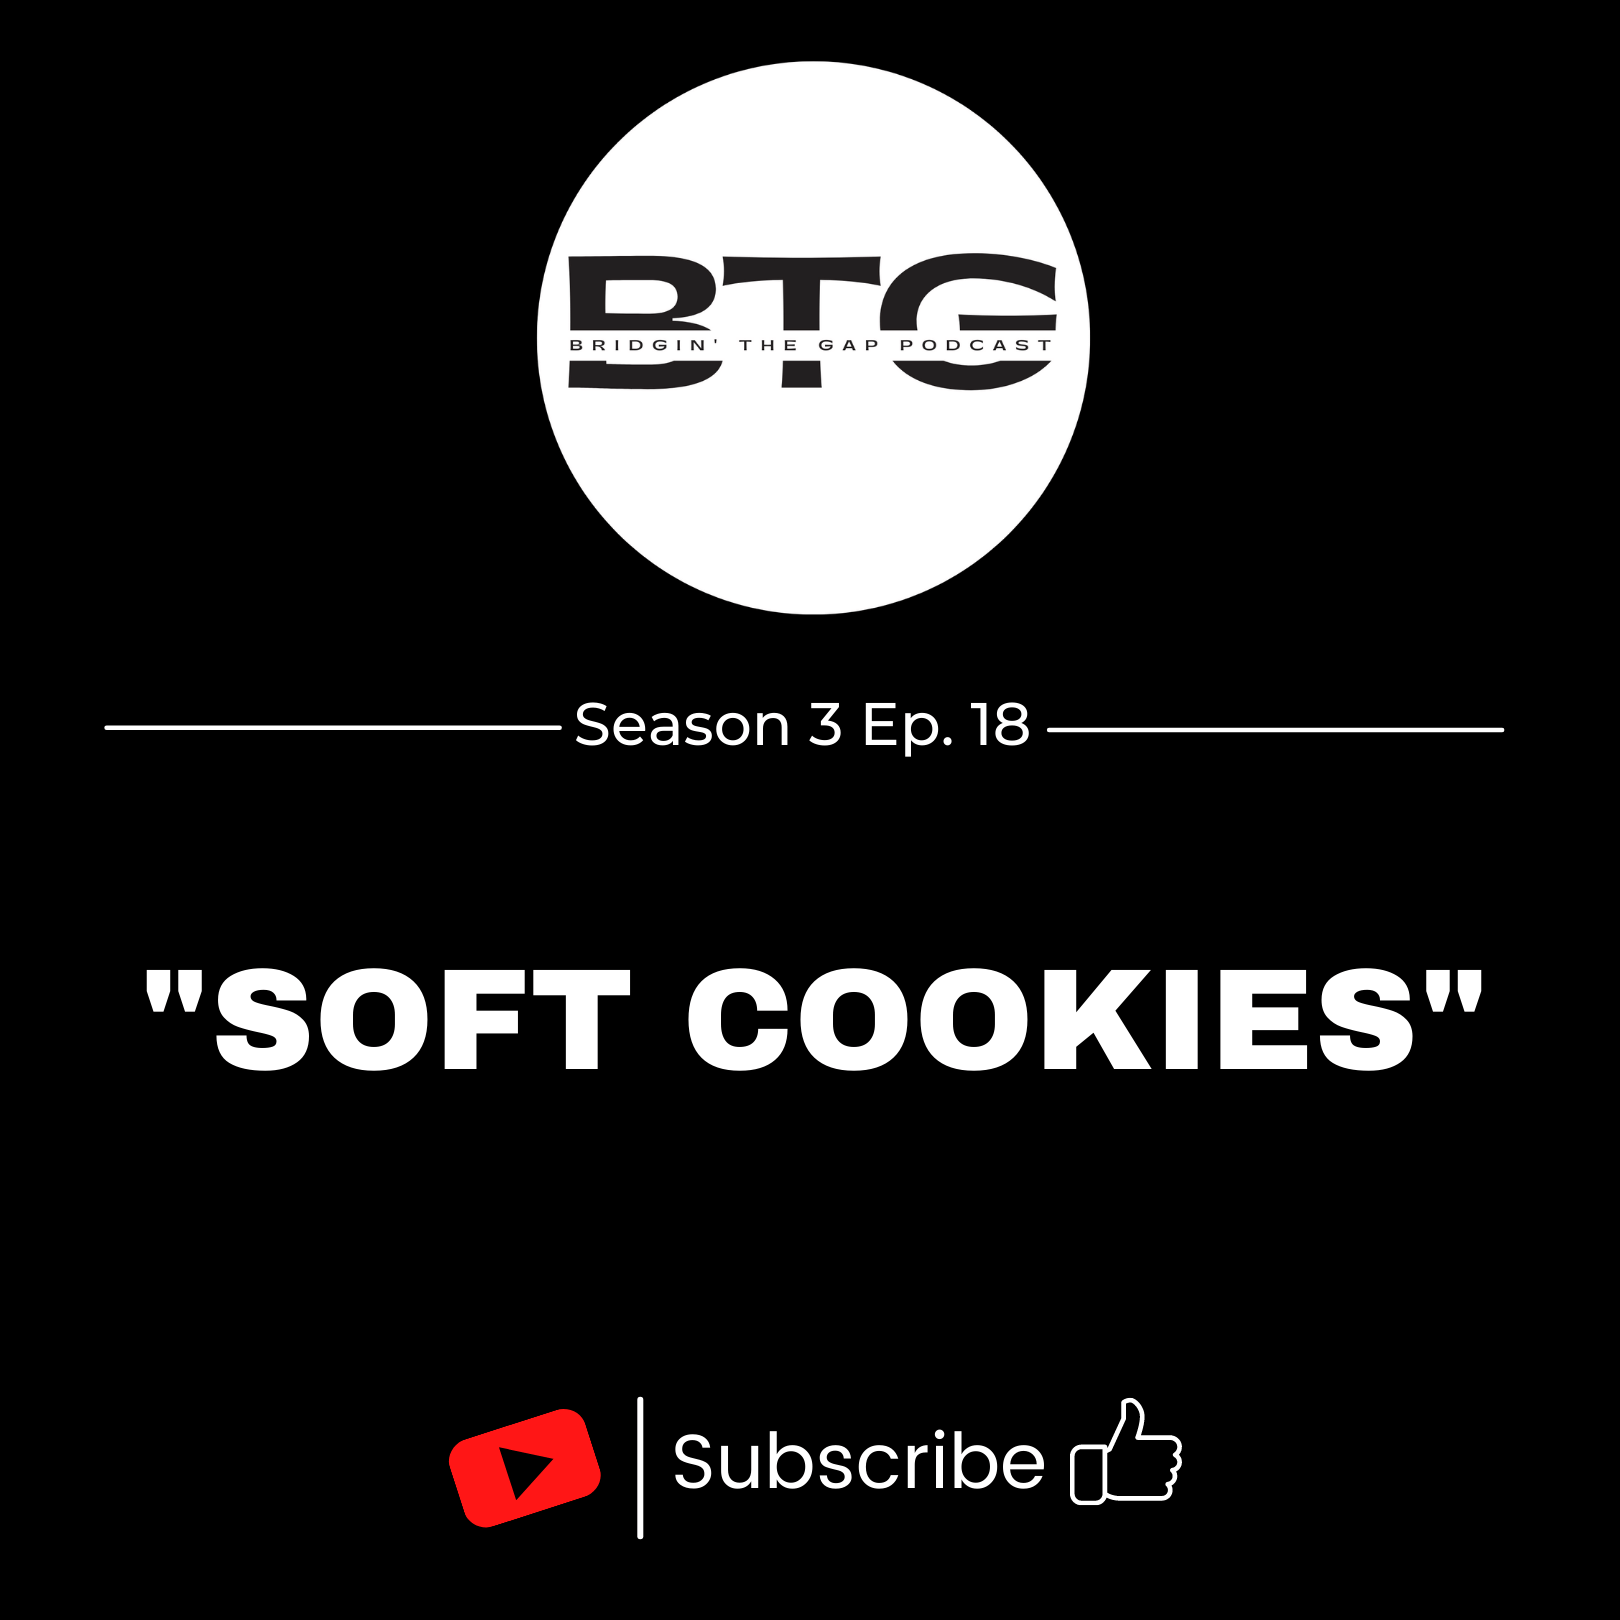 Bridgin' The Gap Podcast Season 3 Ep. 18 "Soft Cookies"